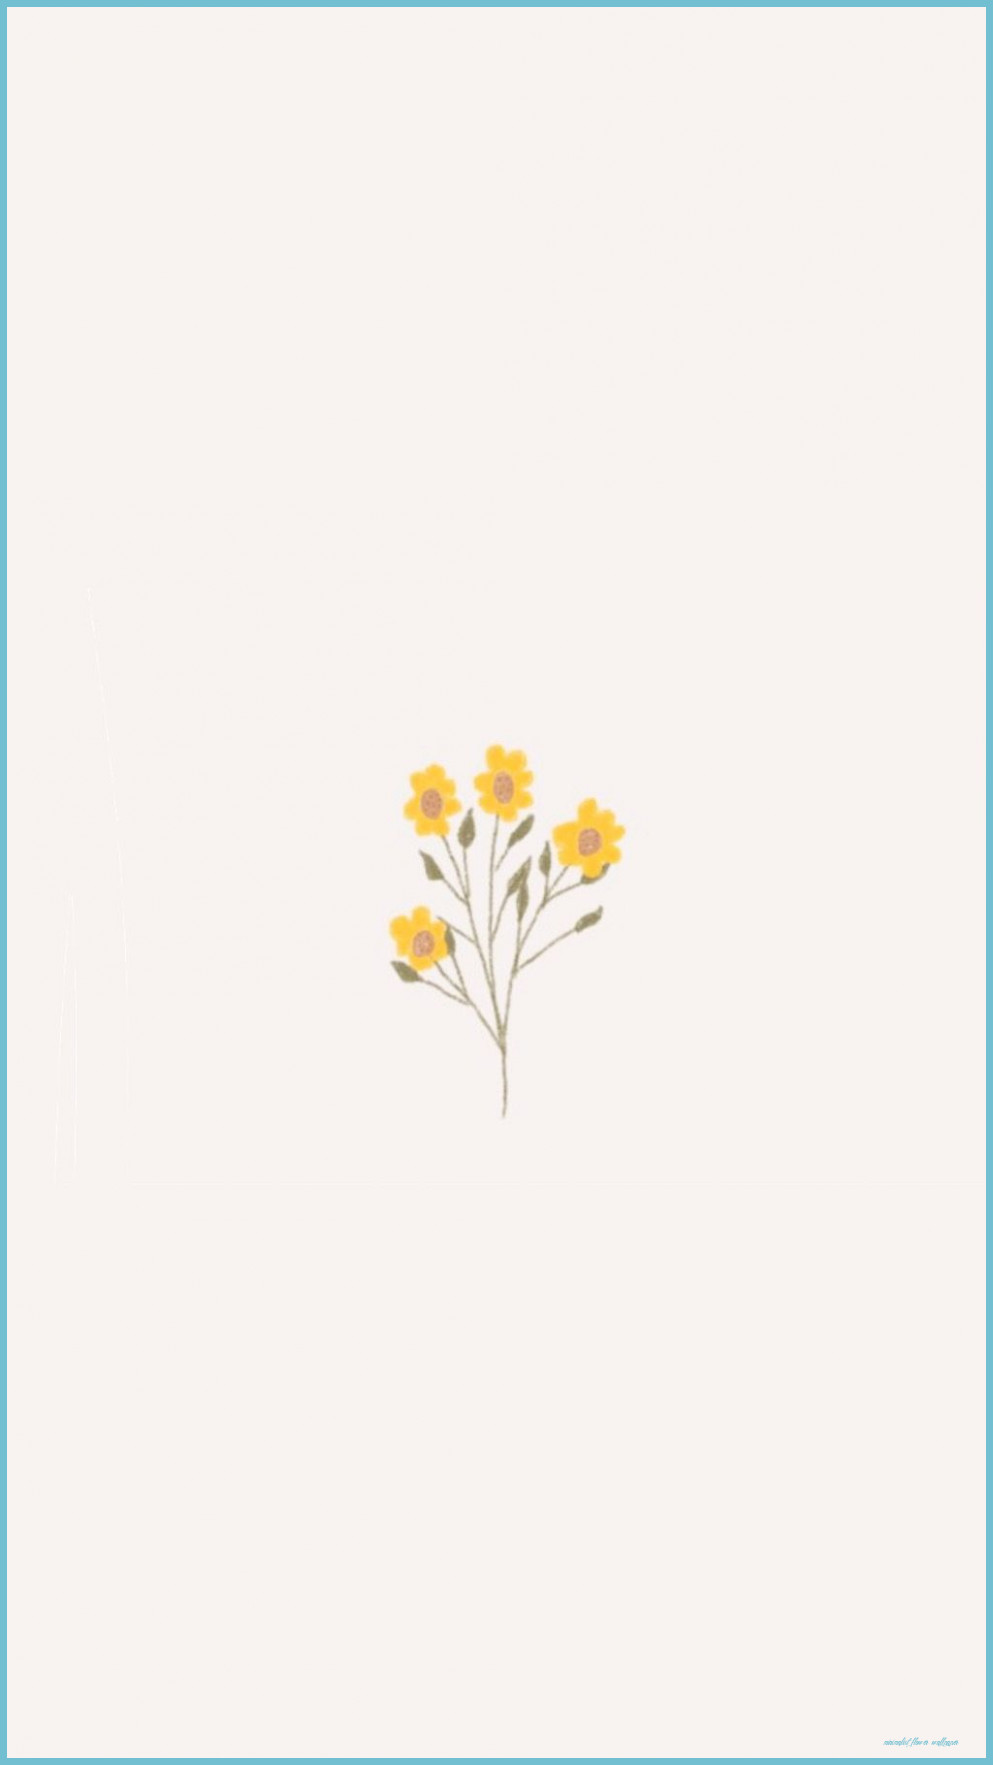 Minimal Flower HD Wallpapers - Wallpaper Cave